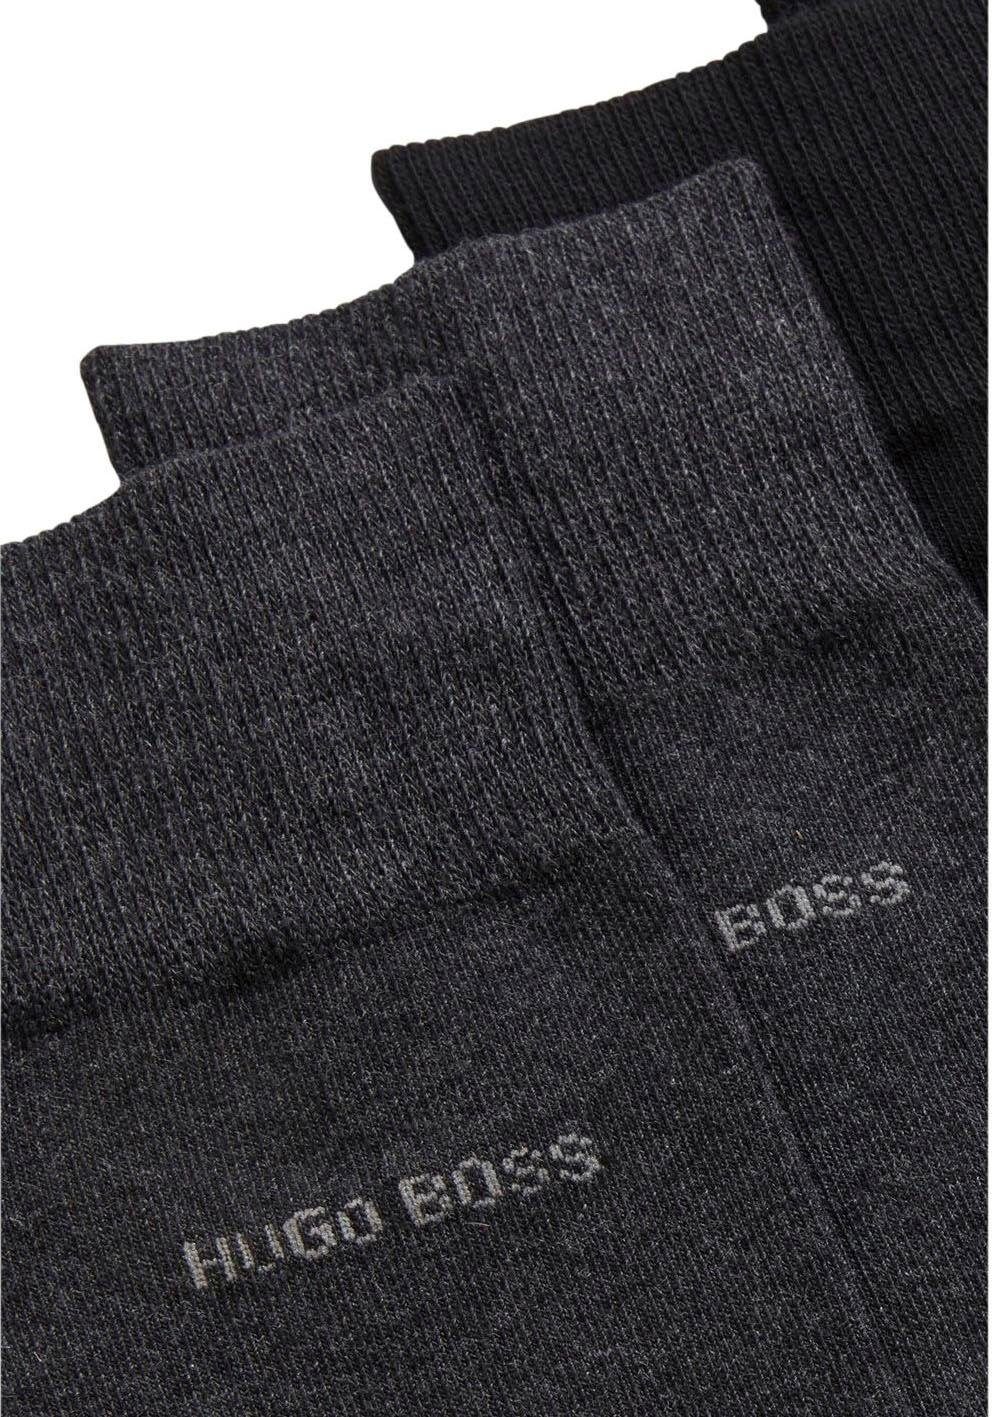 marine Uni anthrazit, RS BOSS Socken 3P (3-Paar) schwarz,